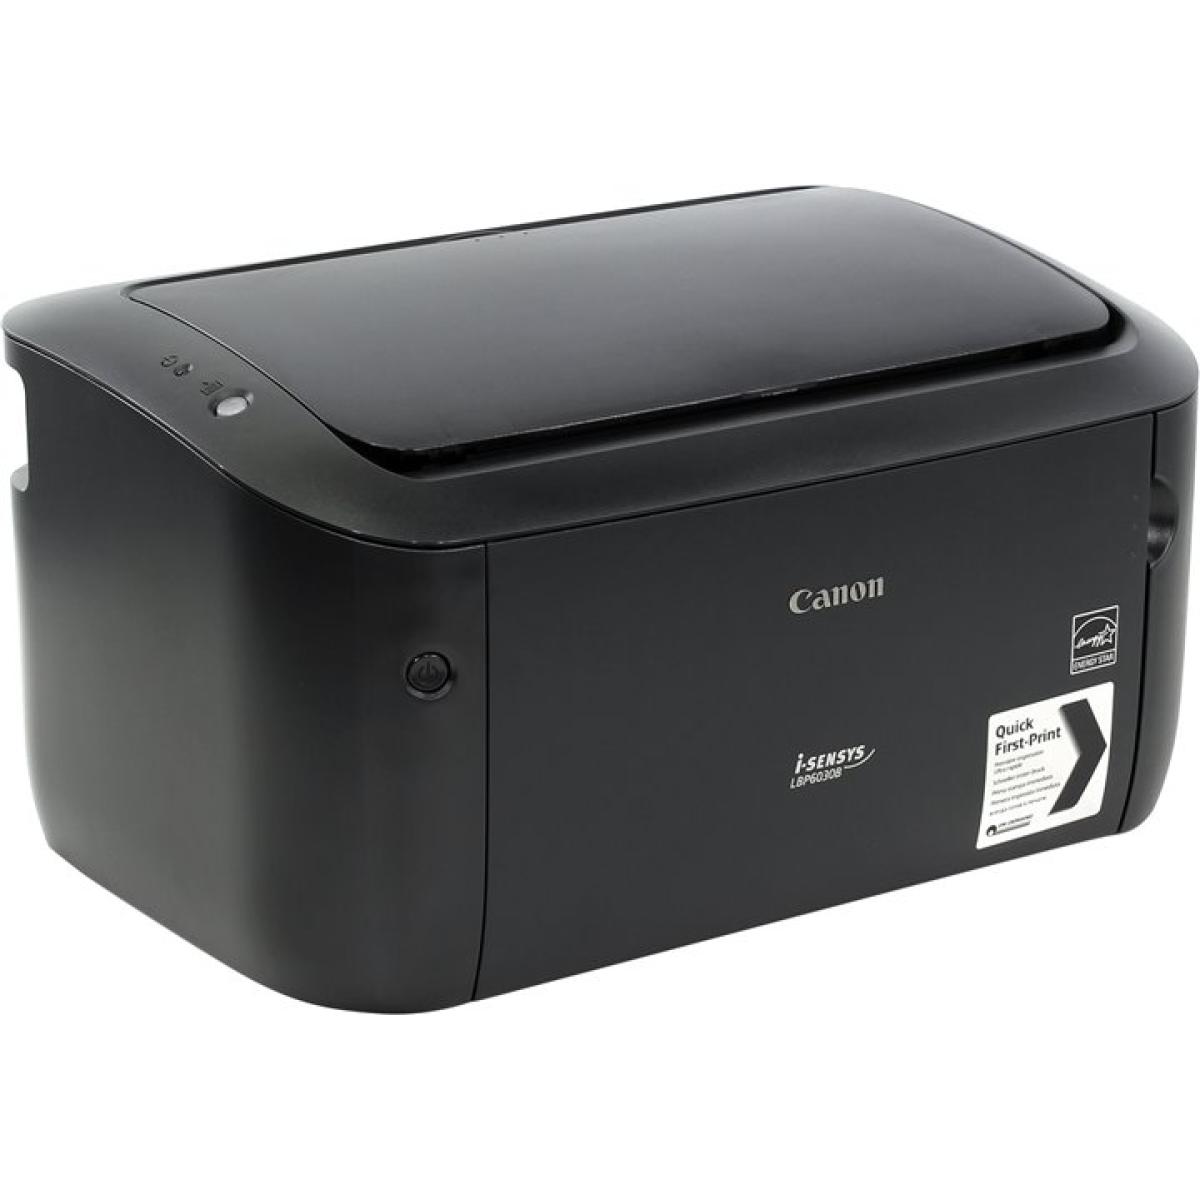 تعريف طابعه كانون 6030 : Canon Lbp 6030w Laserjet Printer ...